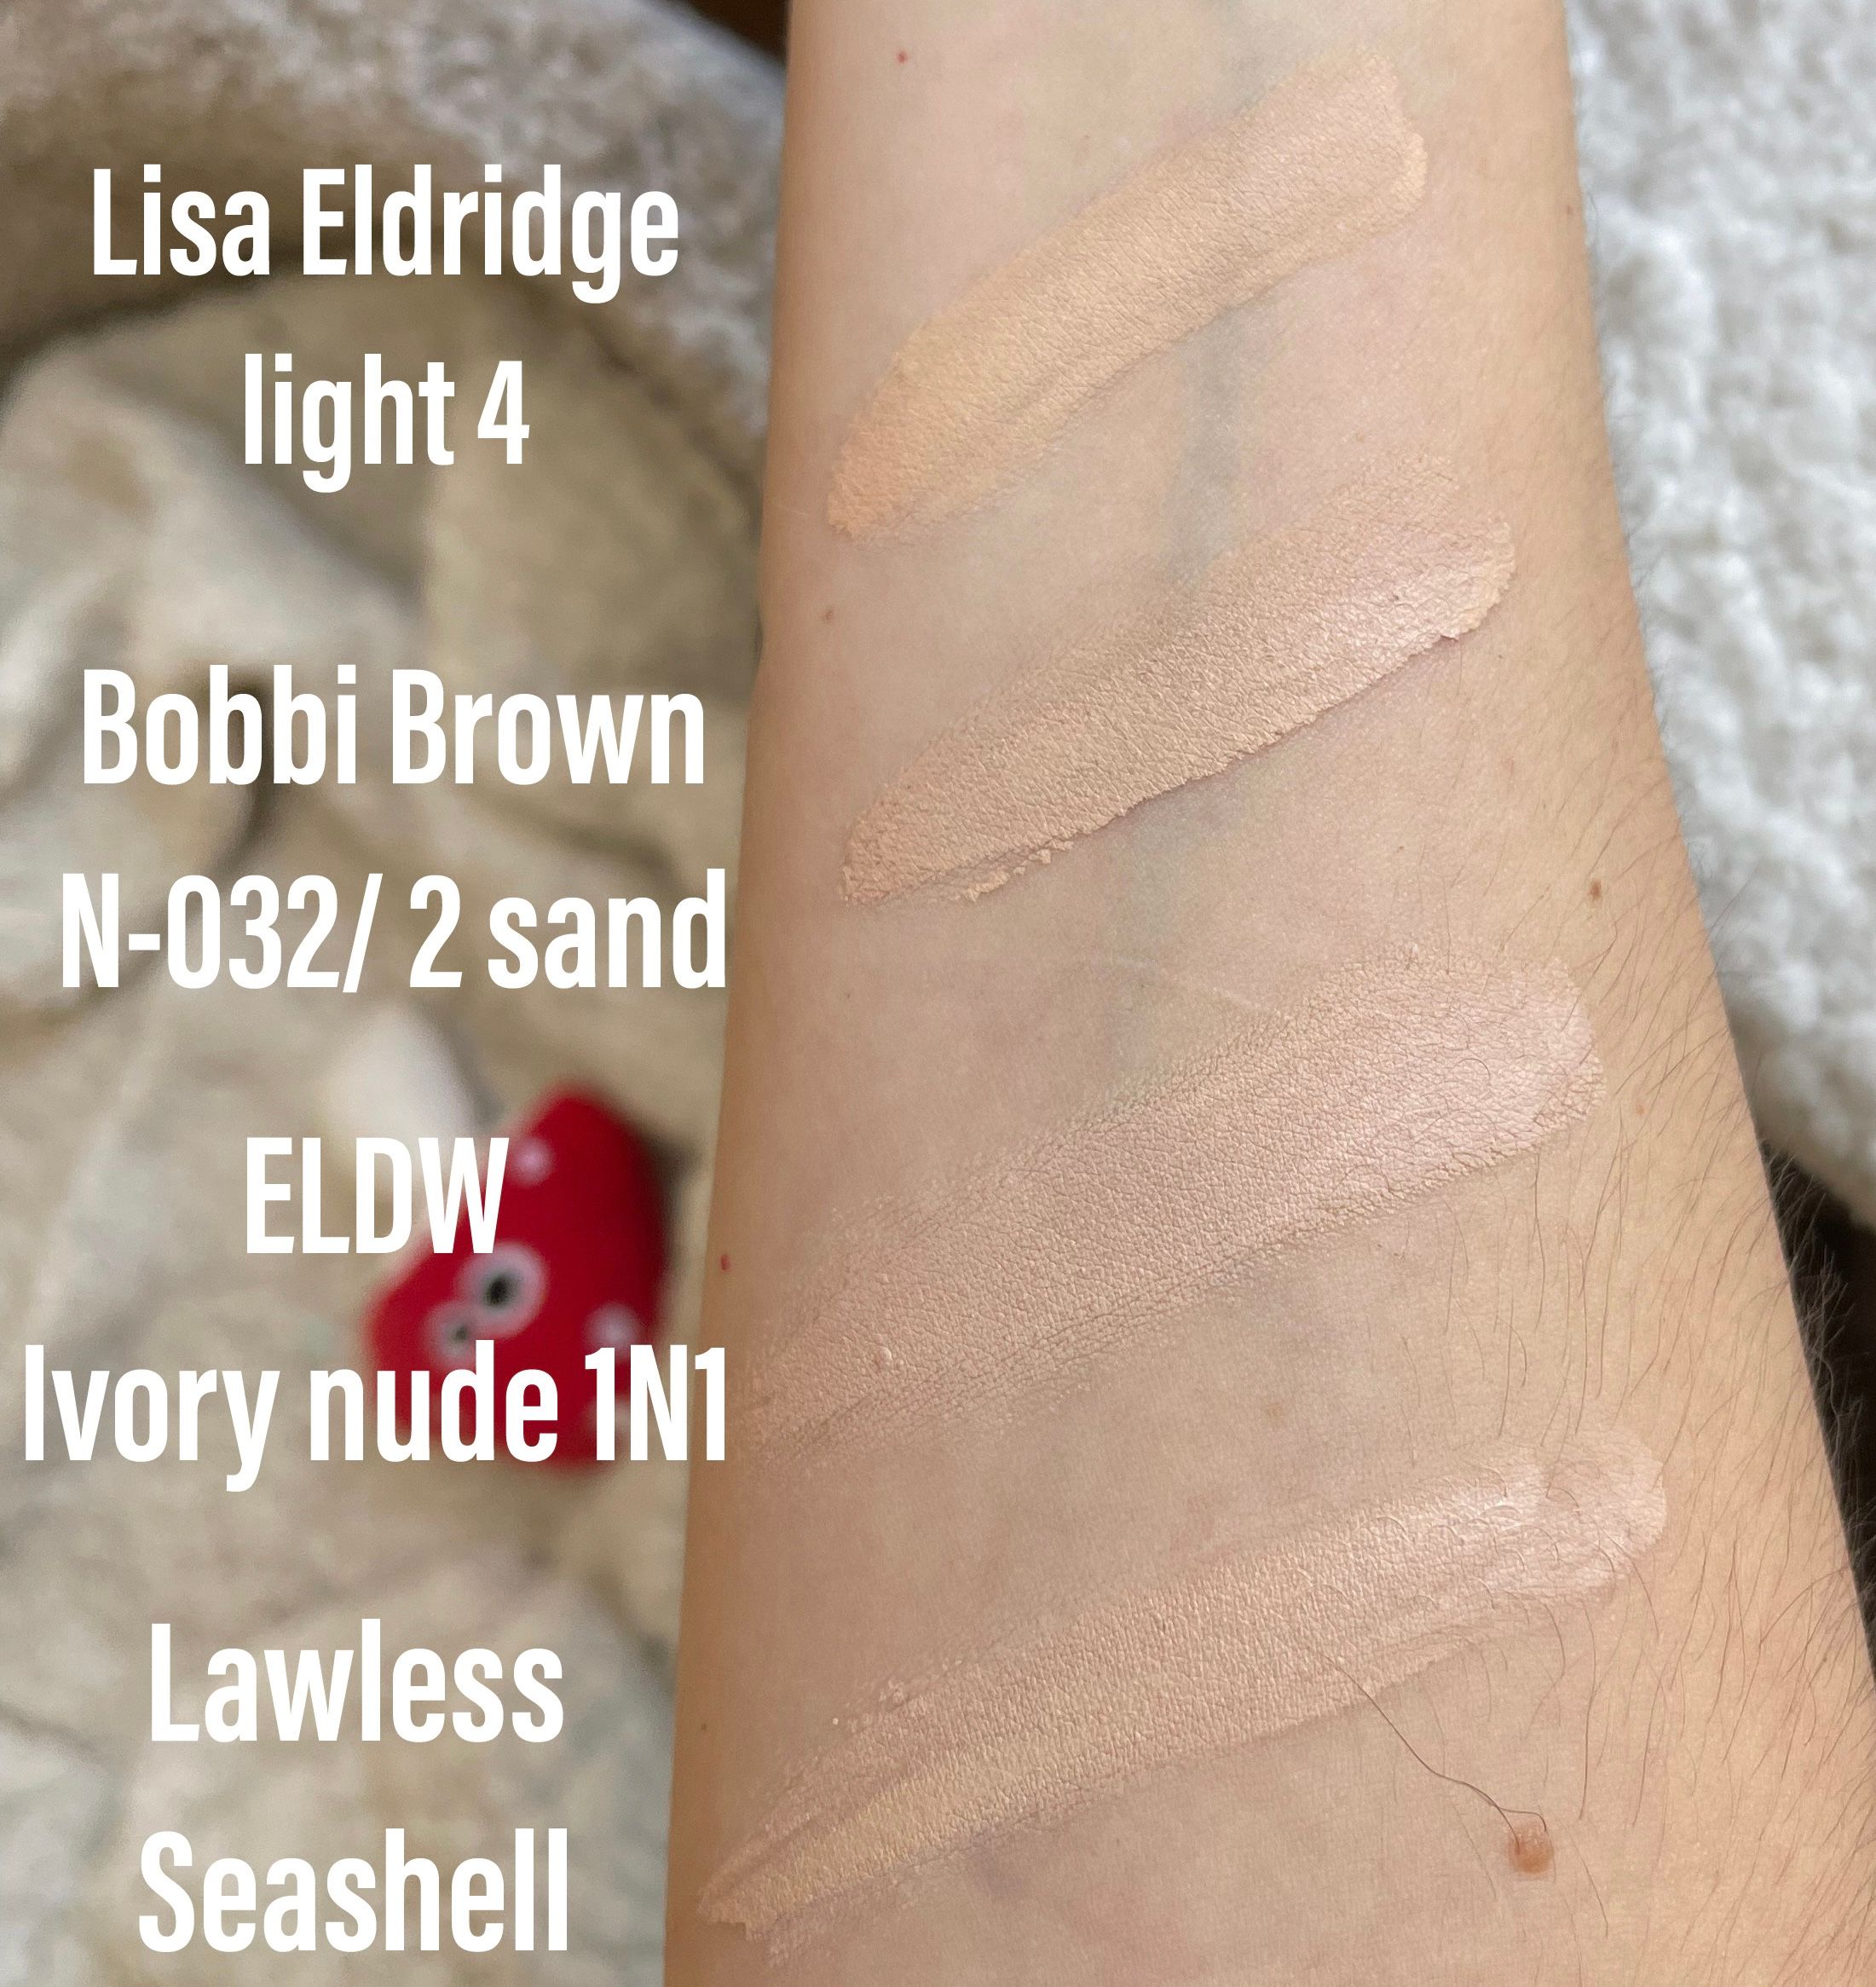 Re: Lisa Eldridge lipsticks - Page 16 - Beauty Insider Community